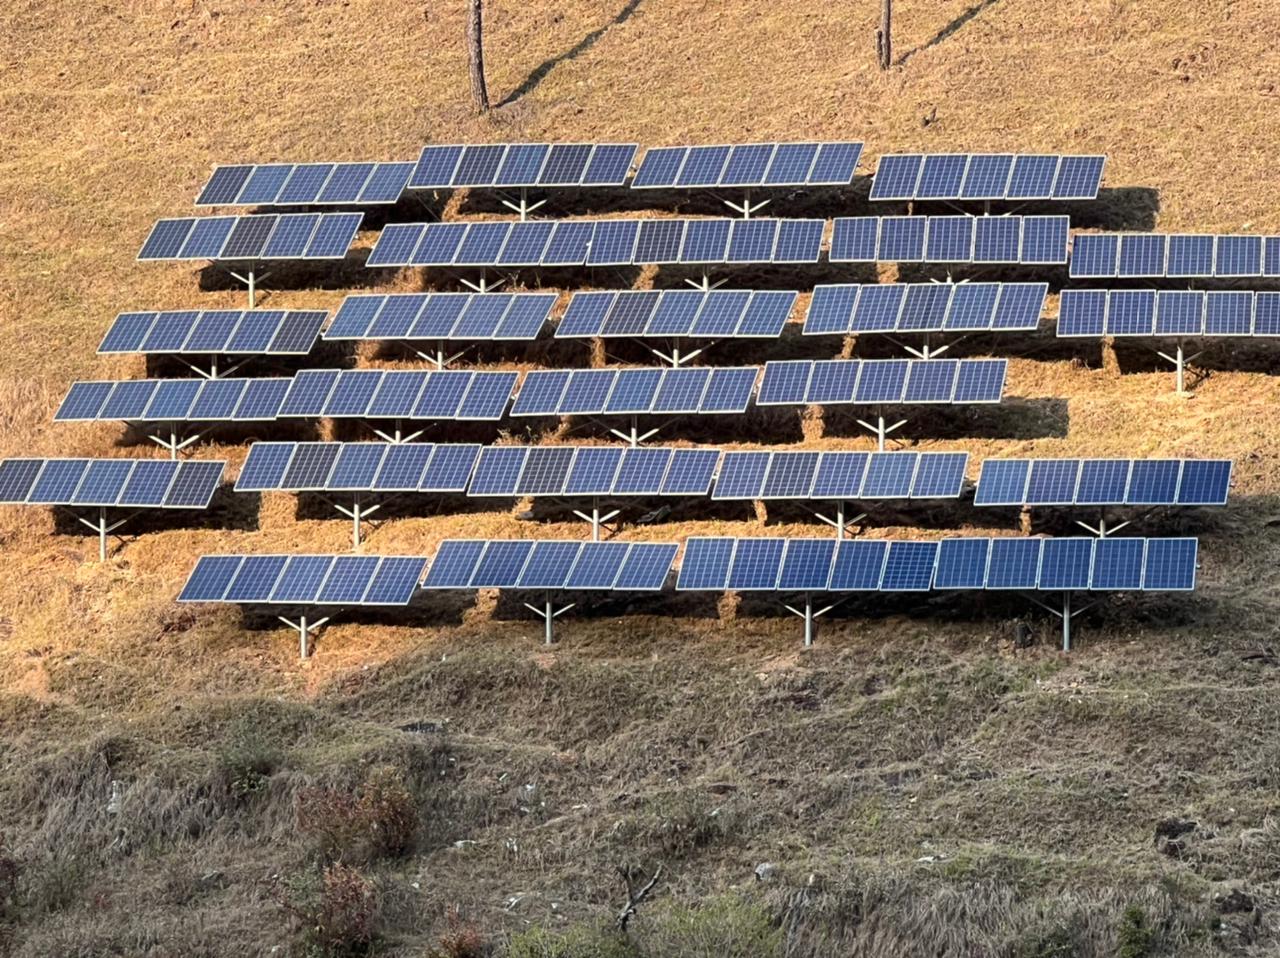 Nuwagaon Solar Lift Irrigation Project